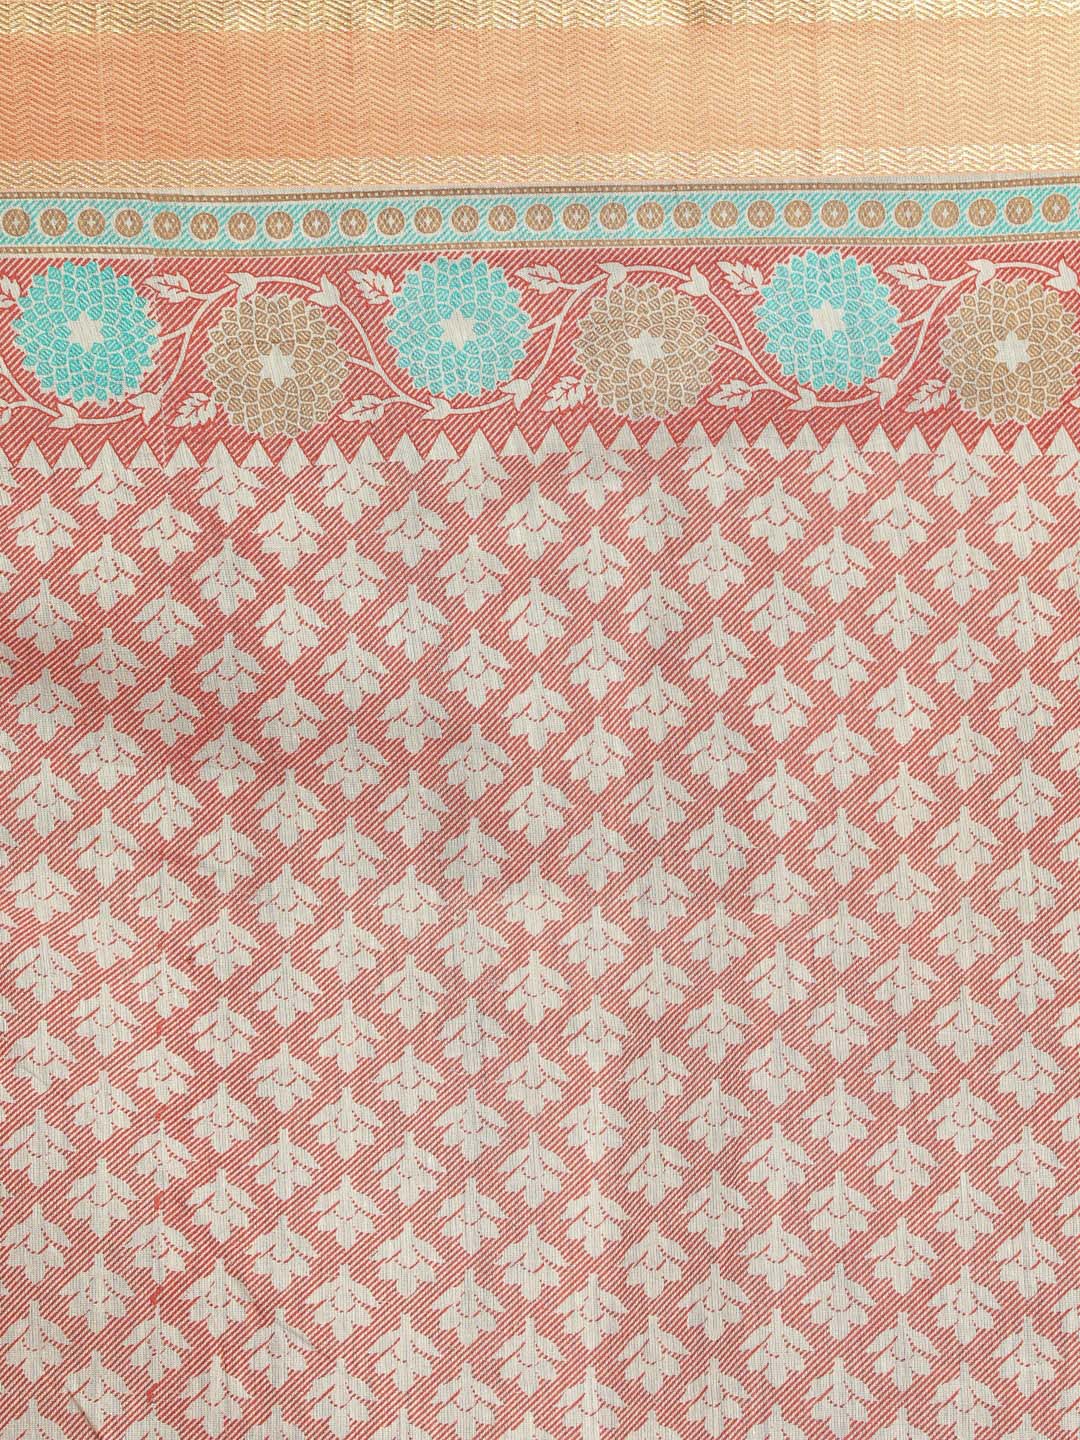 Indethnic Printed Cotton Blend Saree in Orange - Saree Detail View